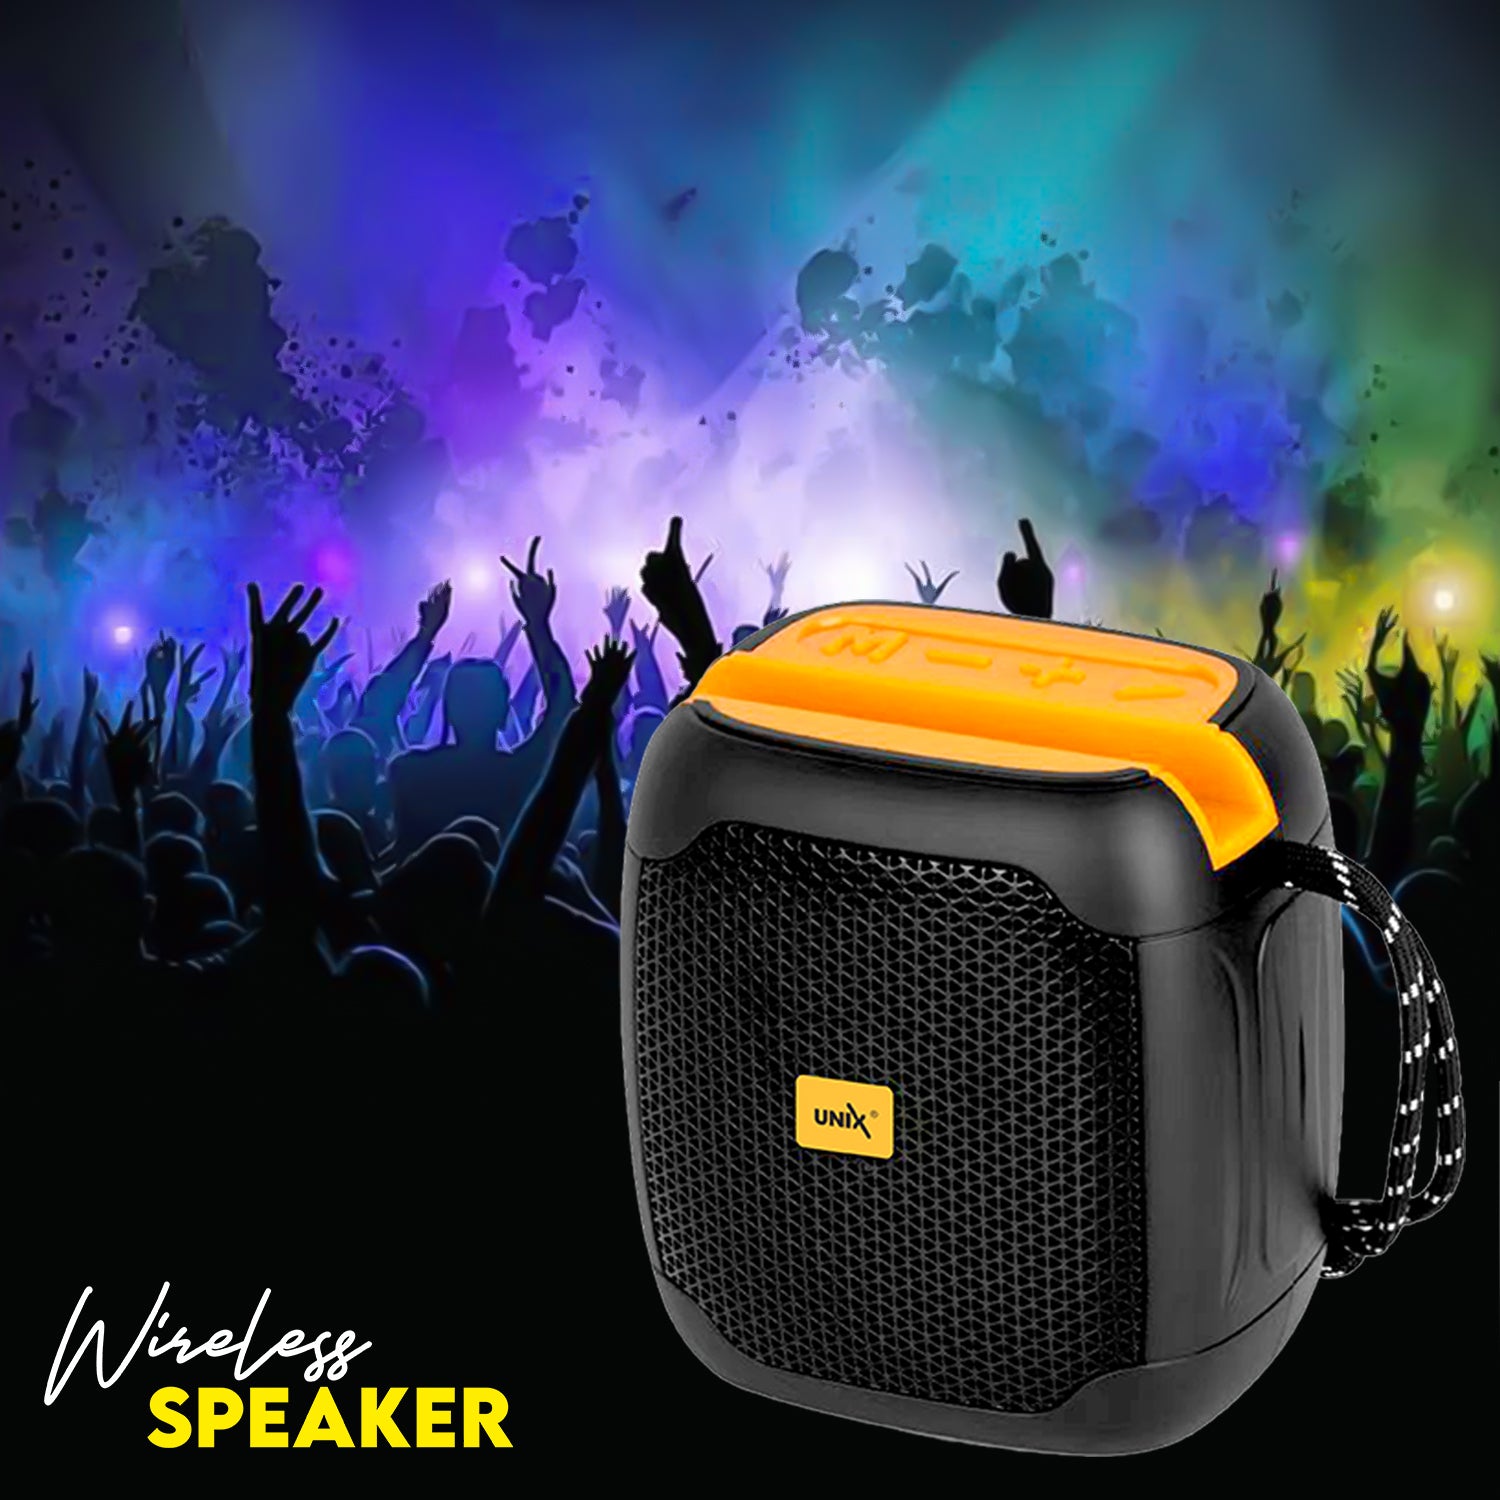 Unix UX-888 Super Sonic Wireless Speaker - Super Bass Black down